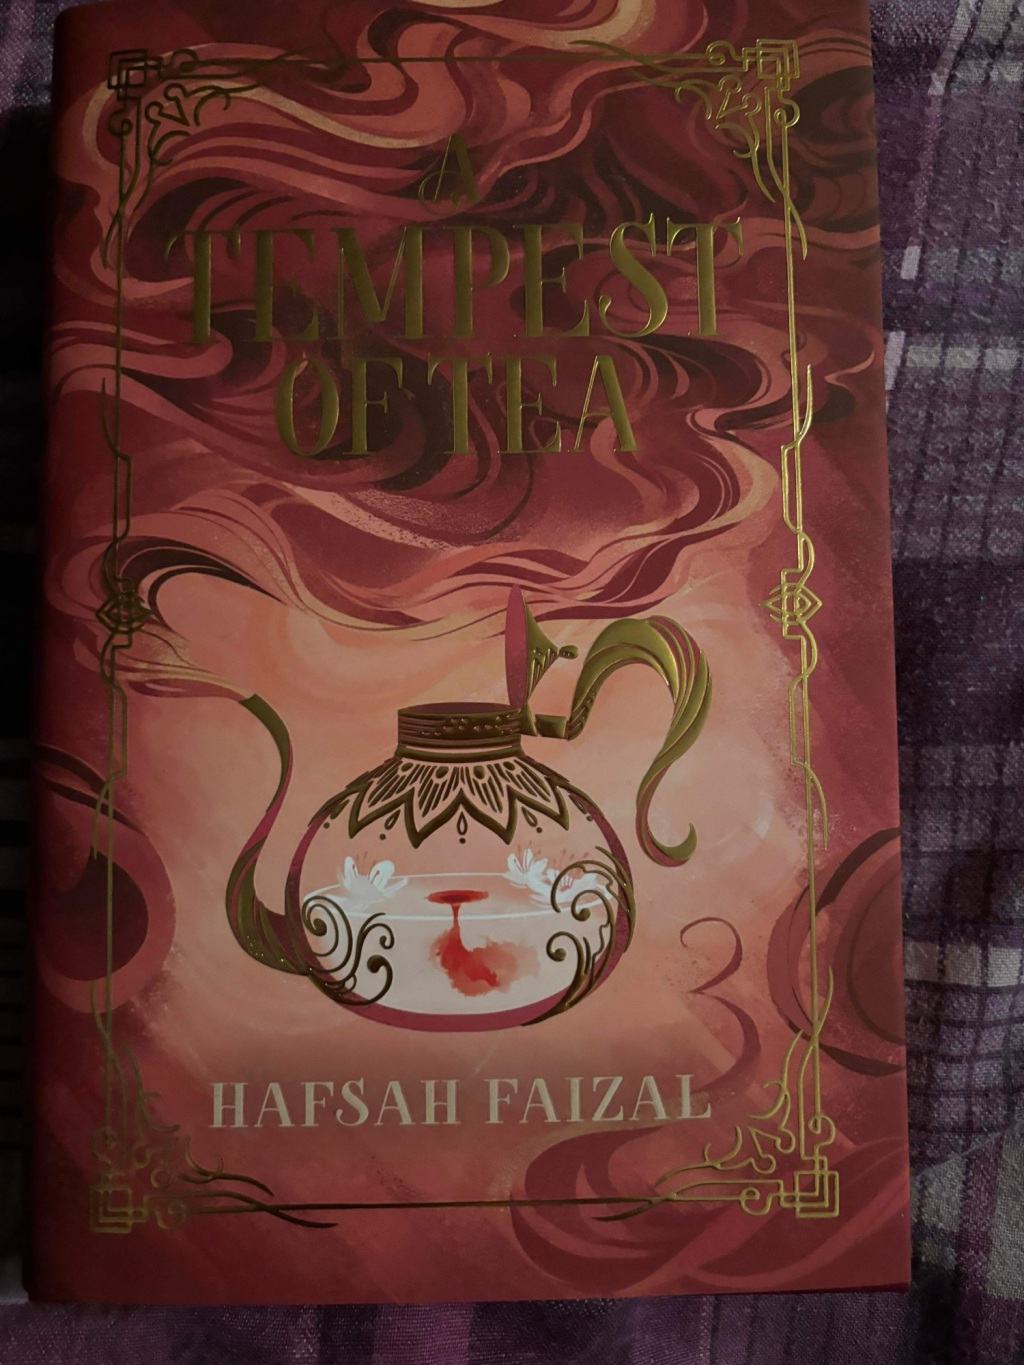 A Tempest of Tea by Hafsah Faizal